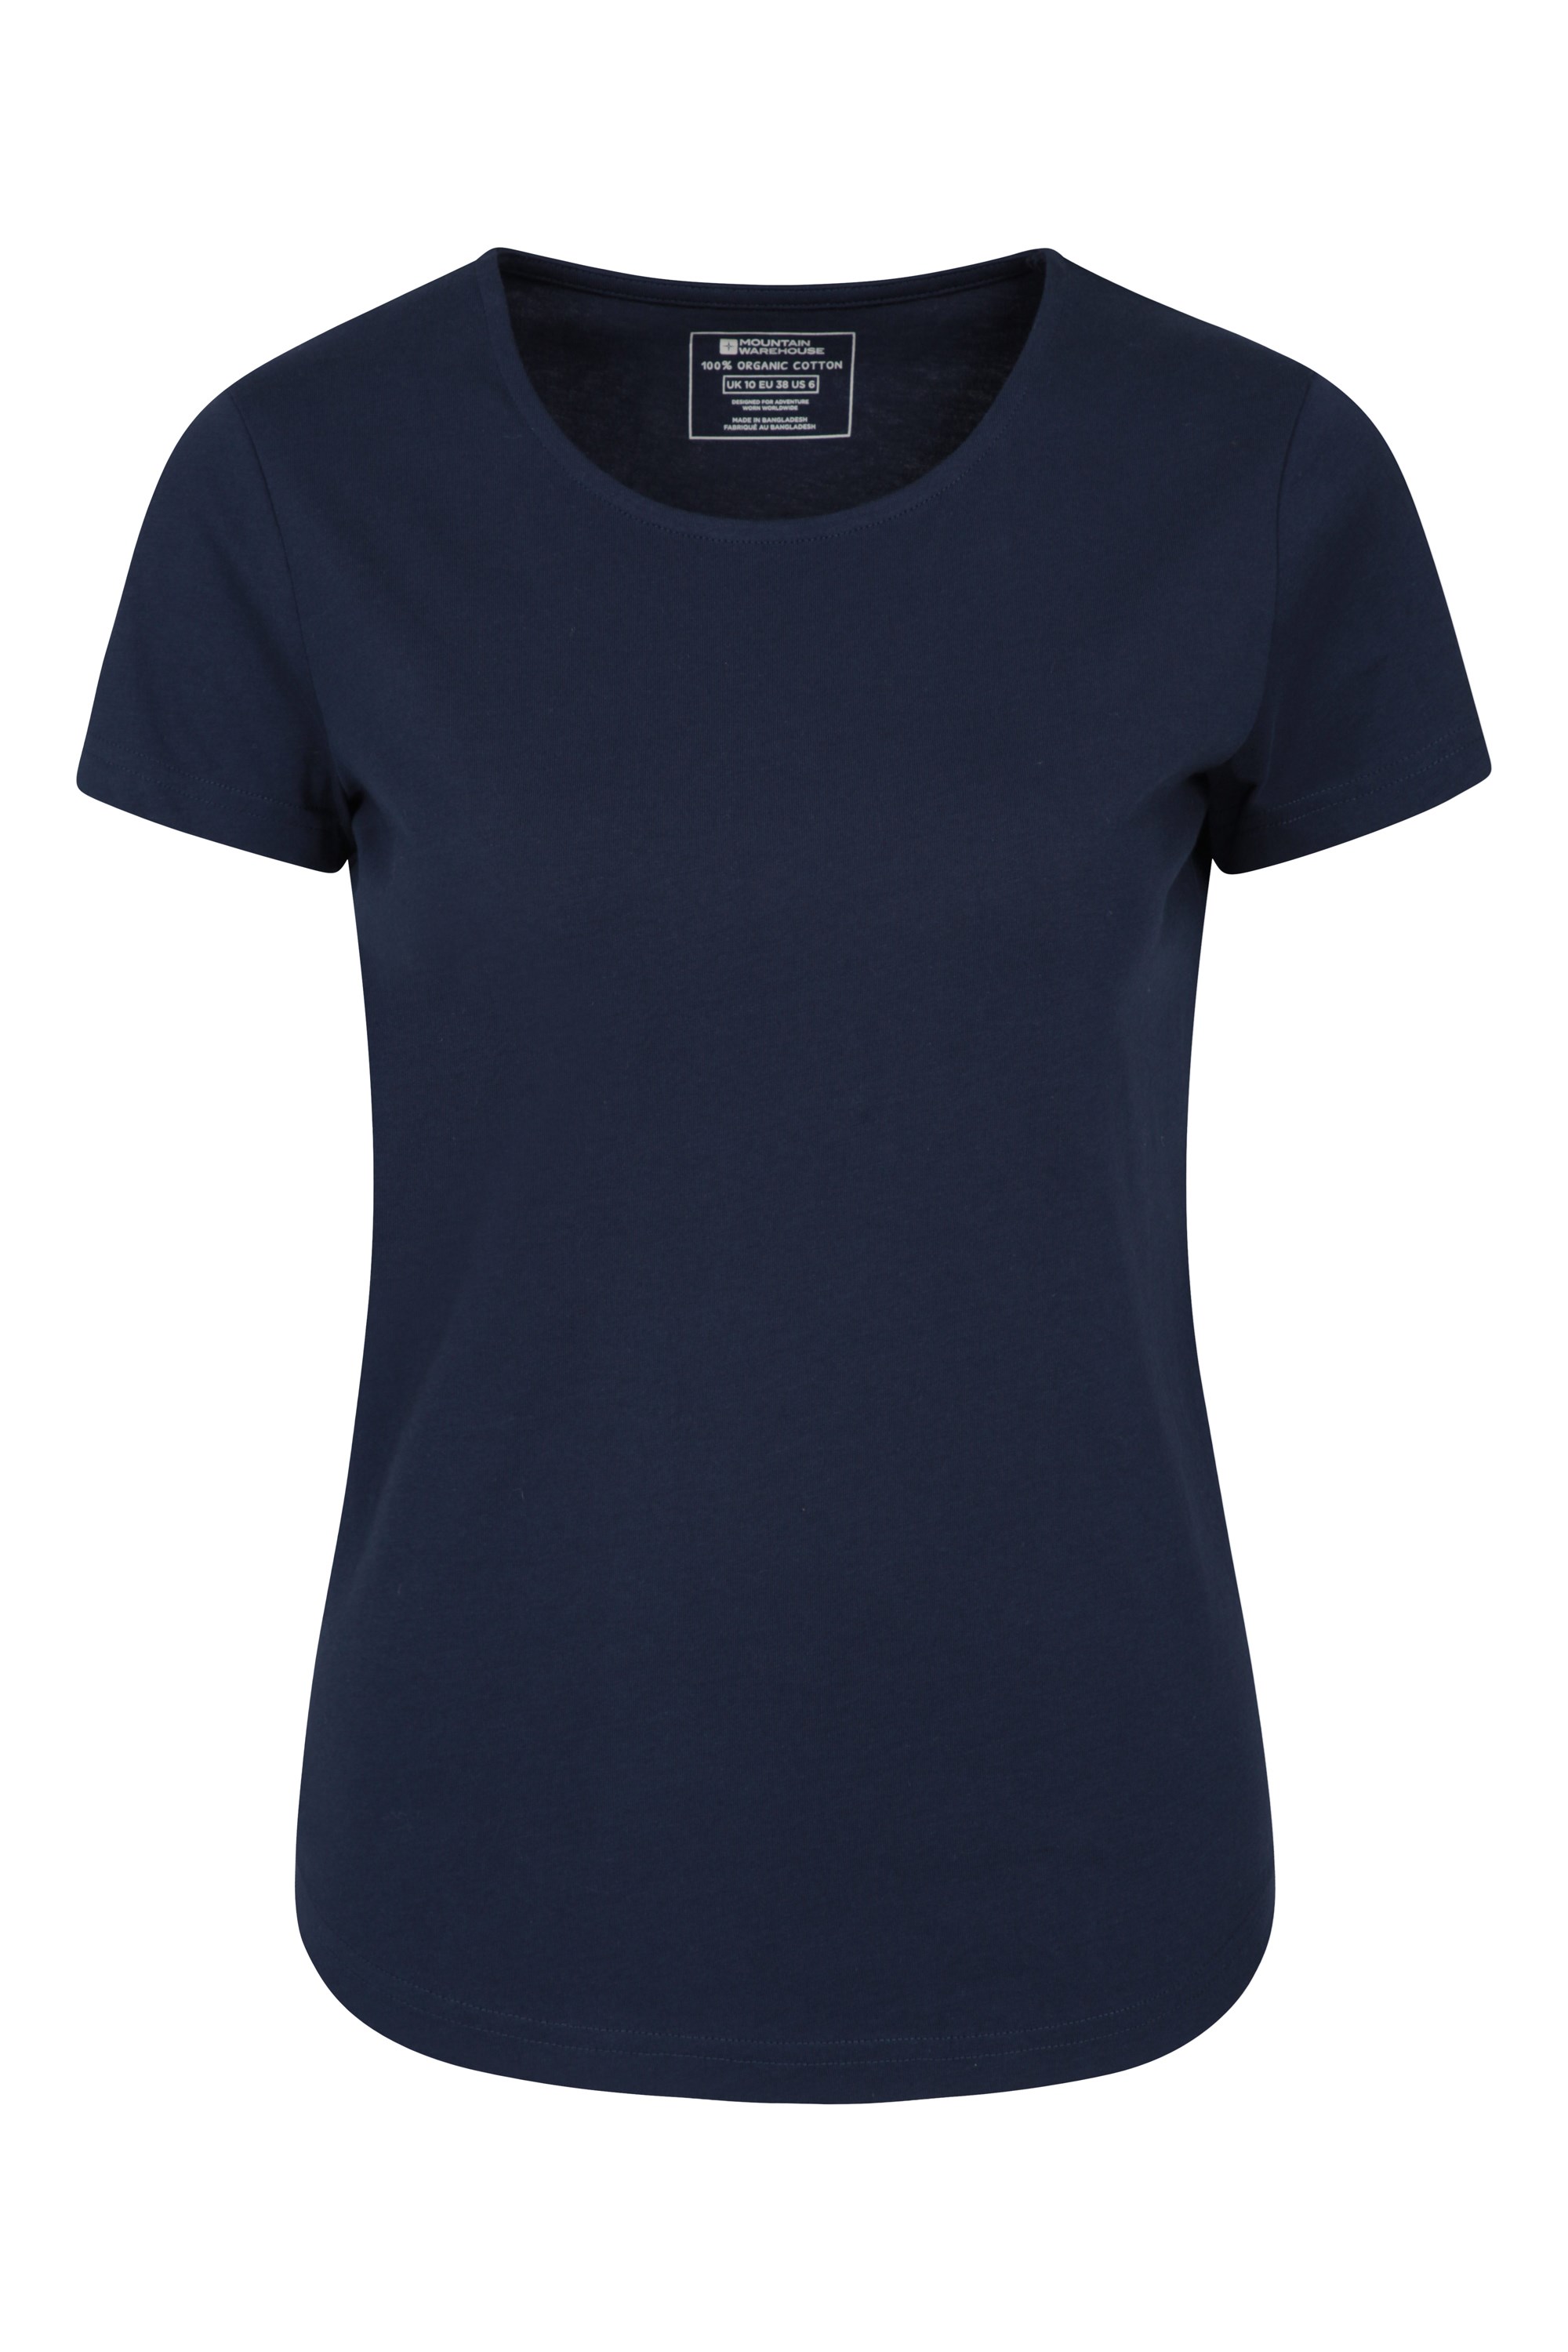 T-Shirt Organique Easy Femme - Bleu Marine